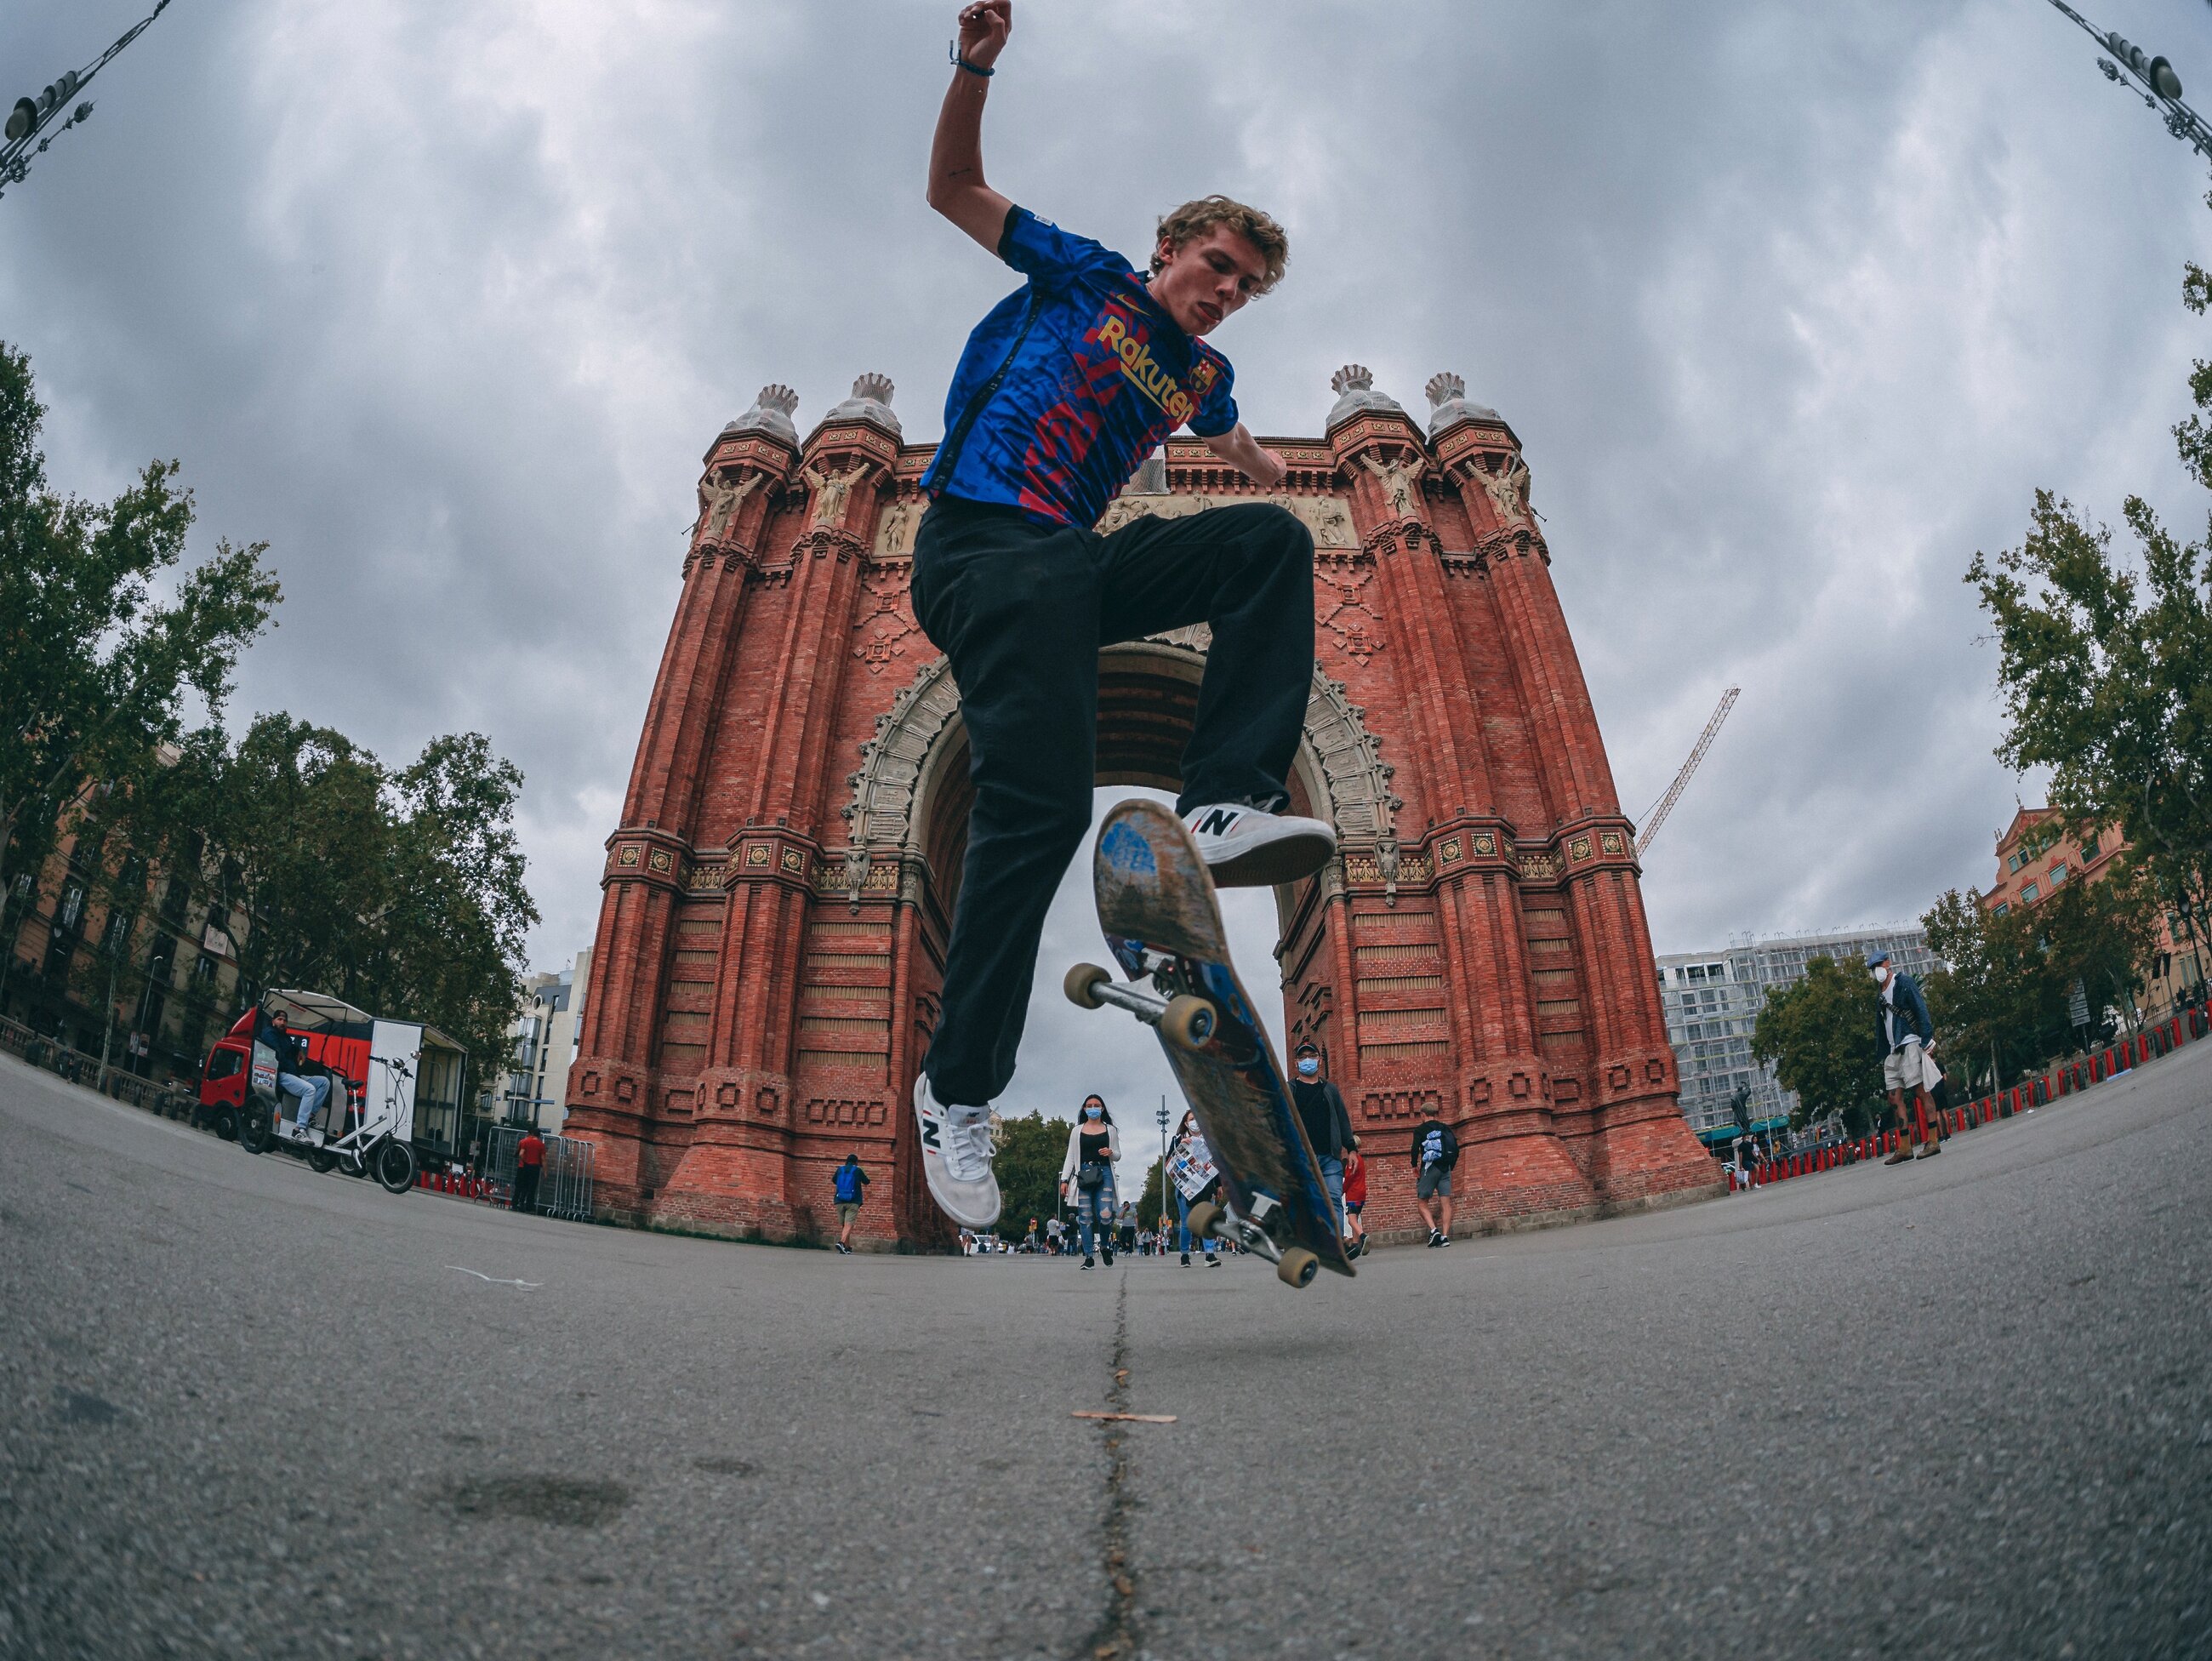 Skateboarding around Barcelona